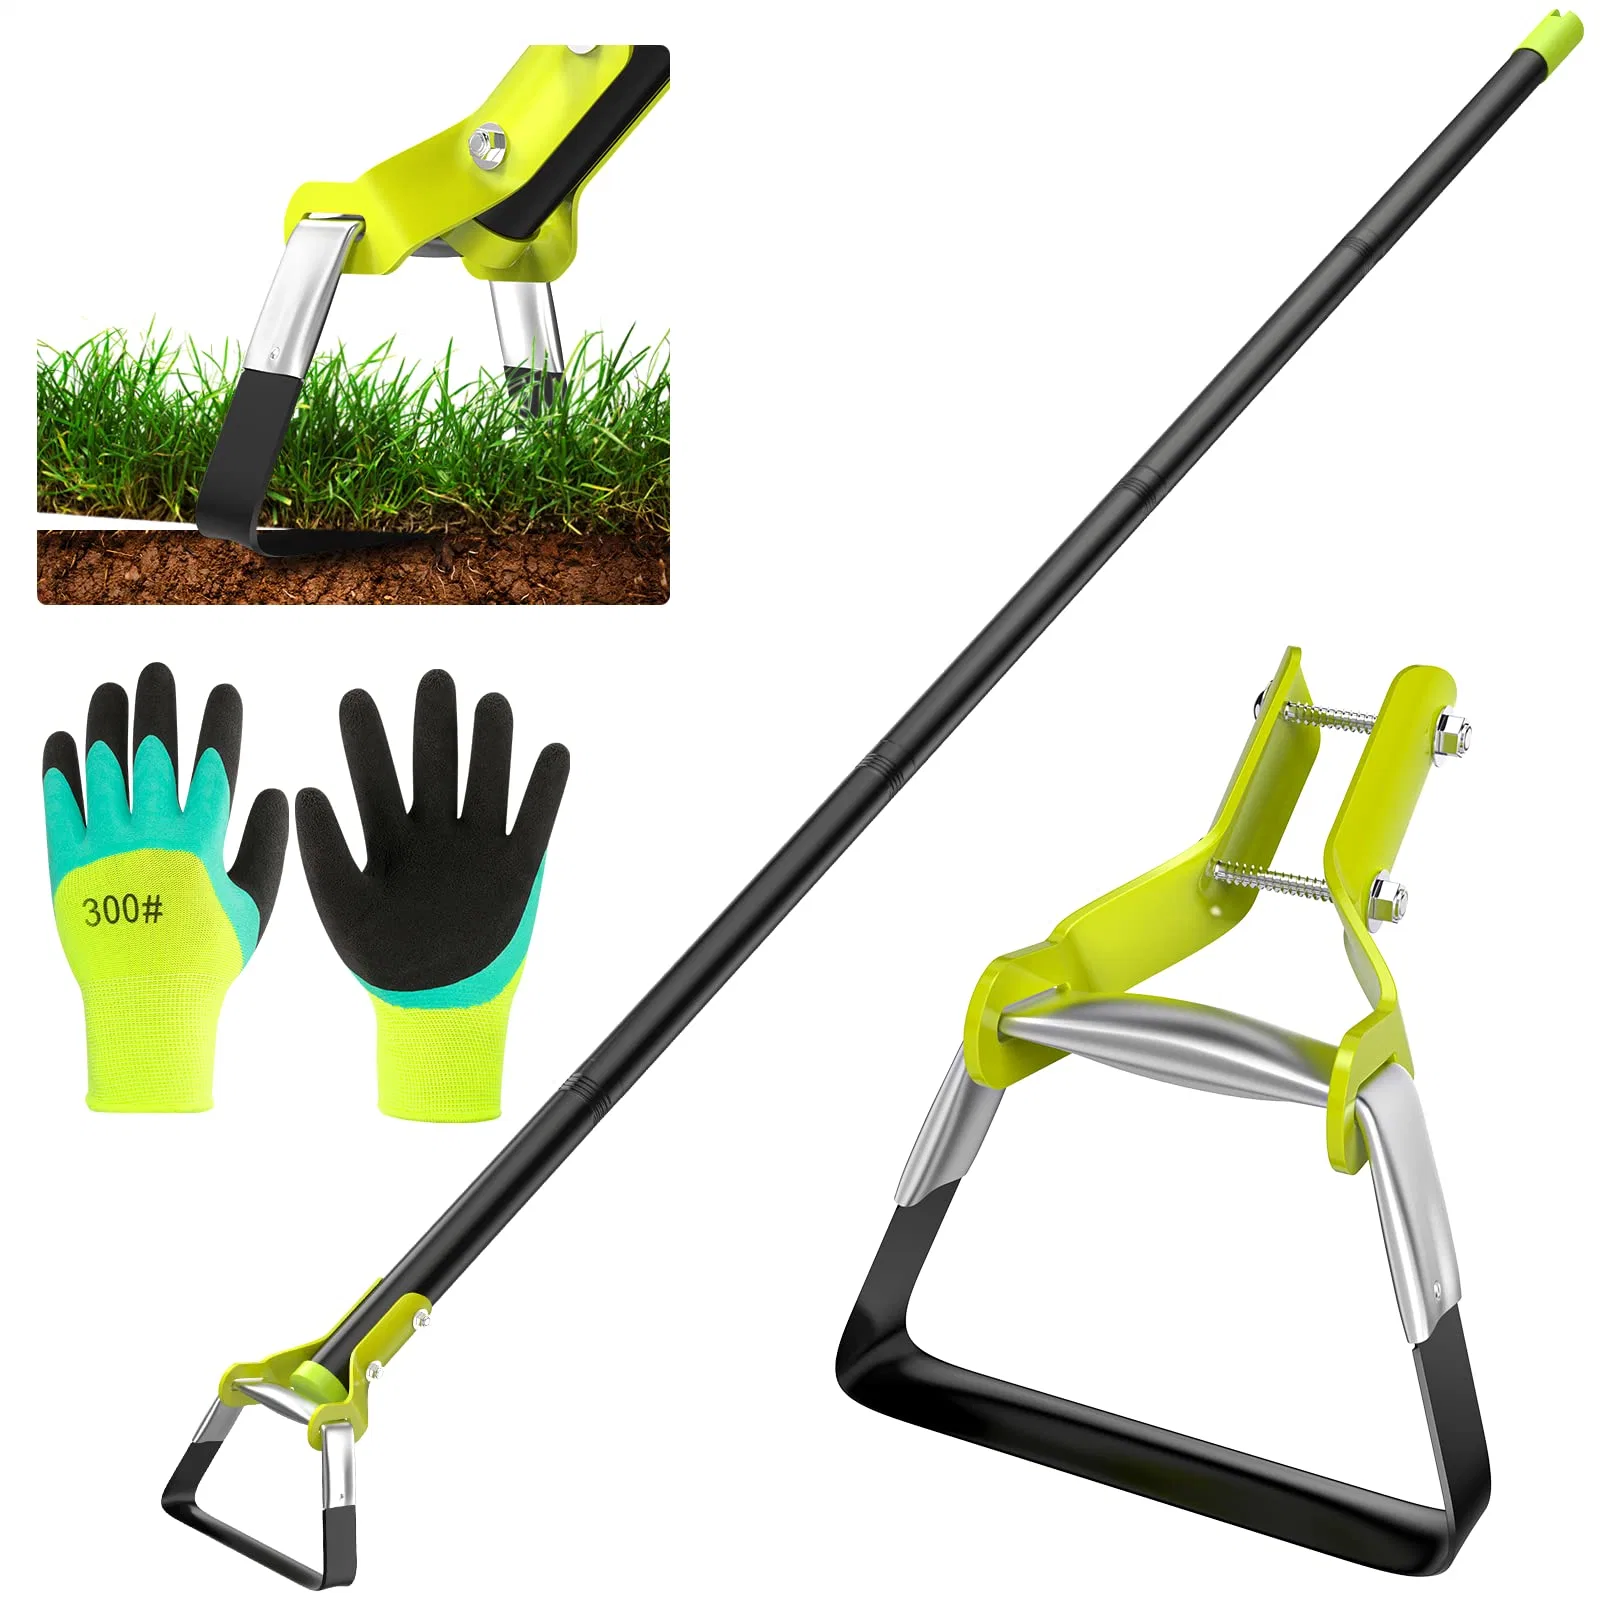 Hot Sale 74 Inches Adjustable Garden Hoe Loosening Soil Garden Tool